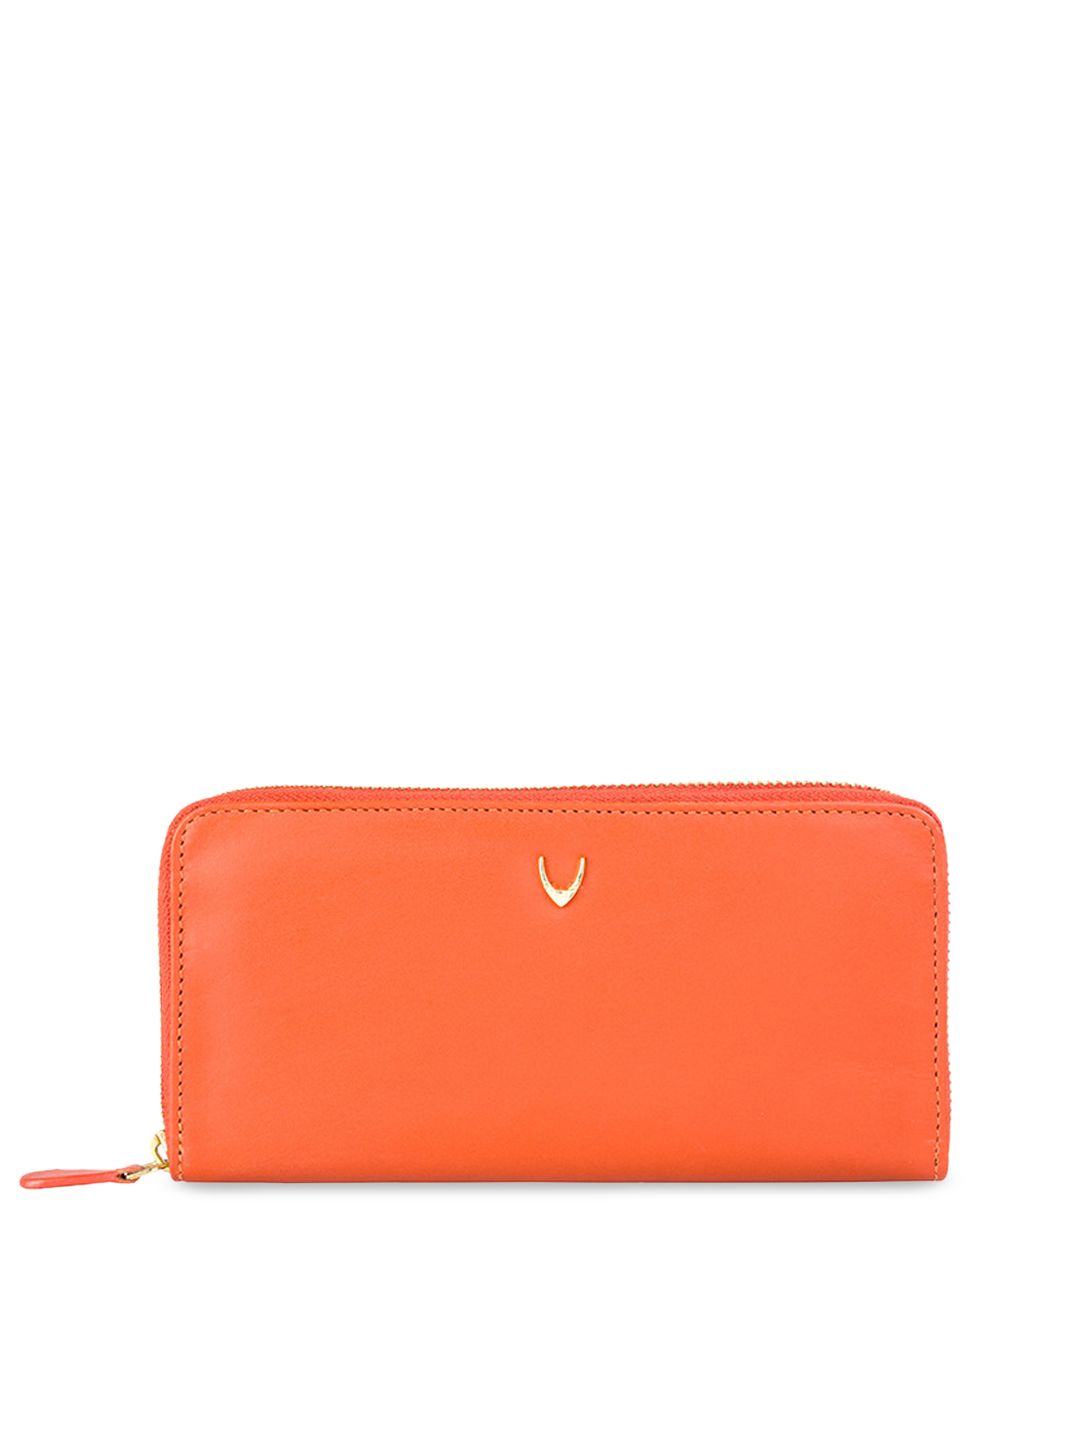 Hidesign Women Orange Solid Zip Around Leather Wallet Price in India